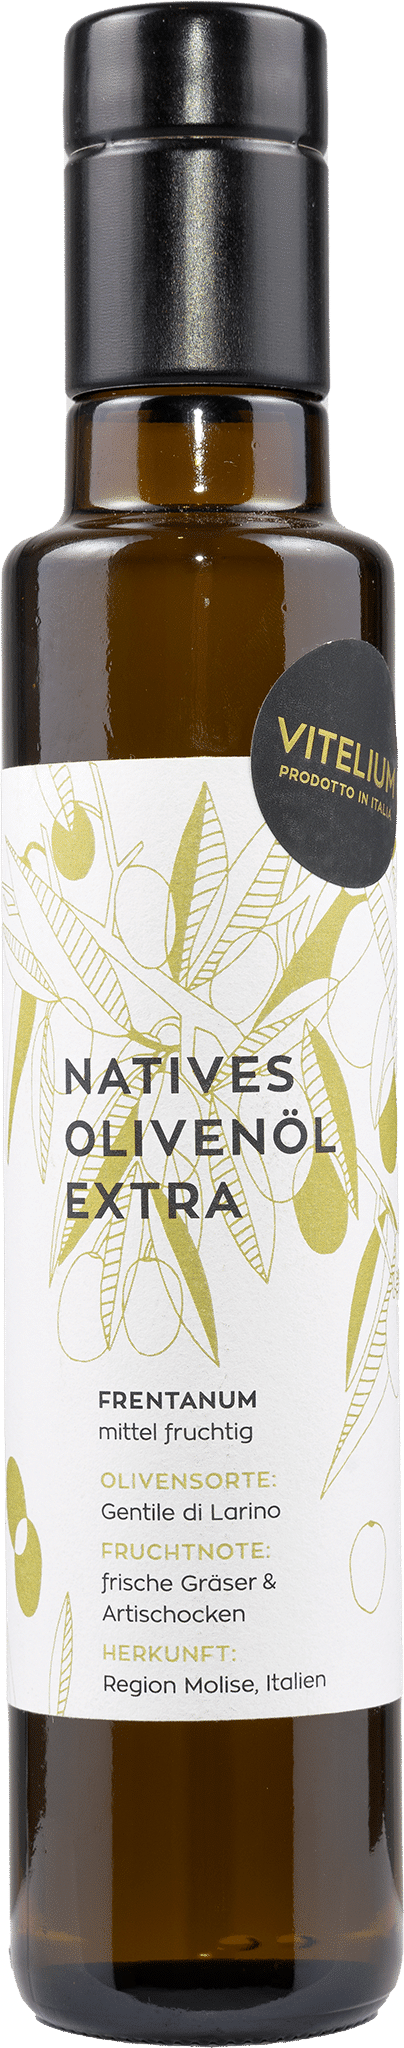 Frentanum natives Olivenöl extra